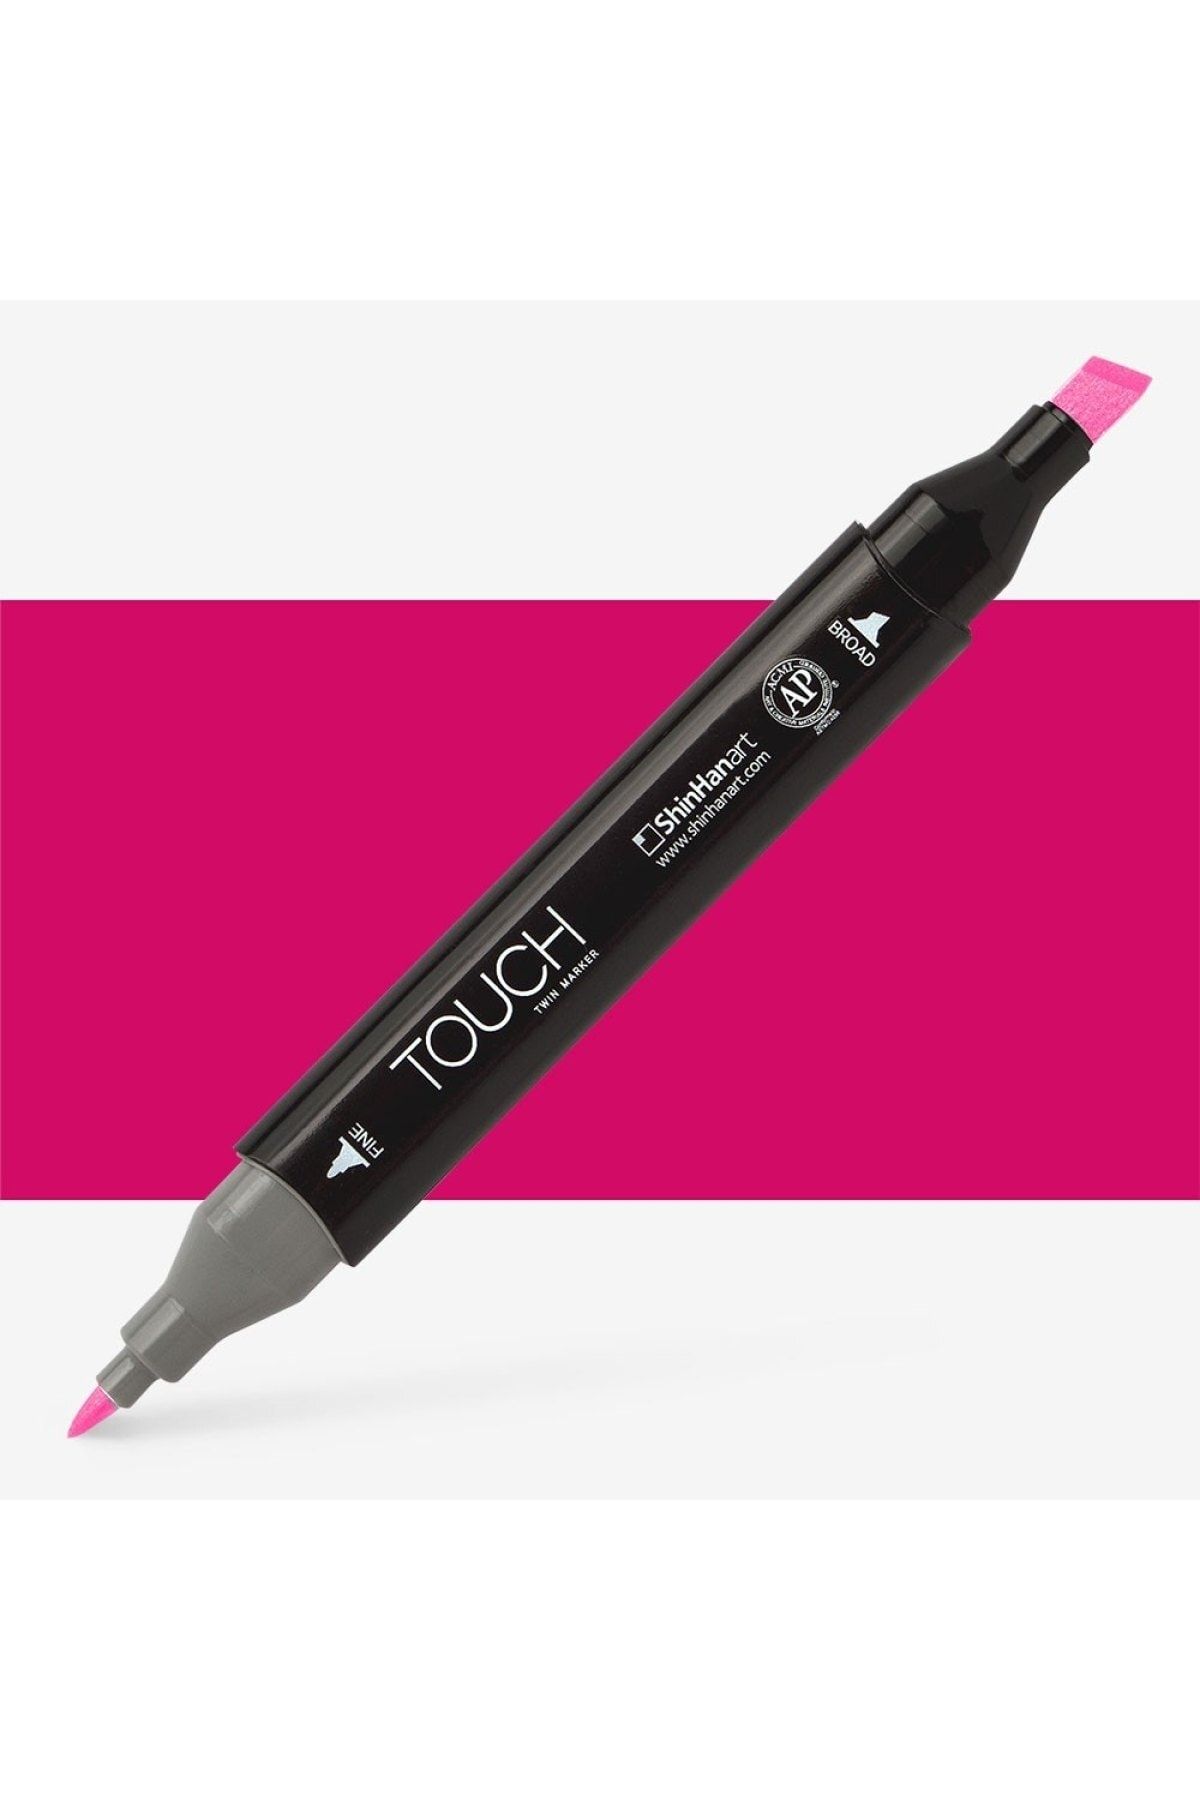 Shinhan Art Touch Twin Marker Pen : Çift Uçlu Marker Kalemi : Rose Red : R3